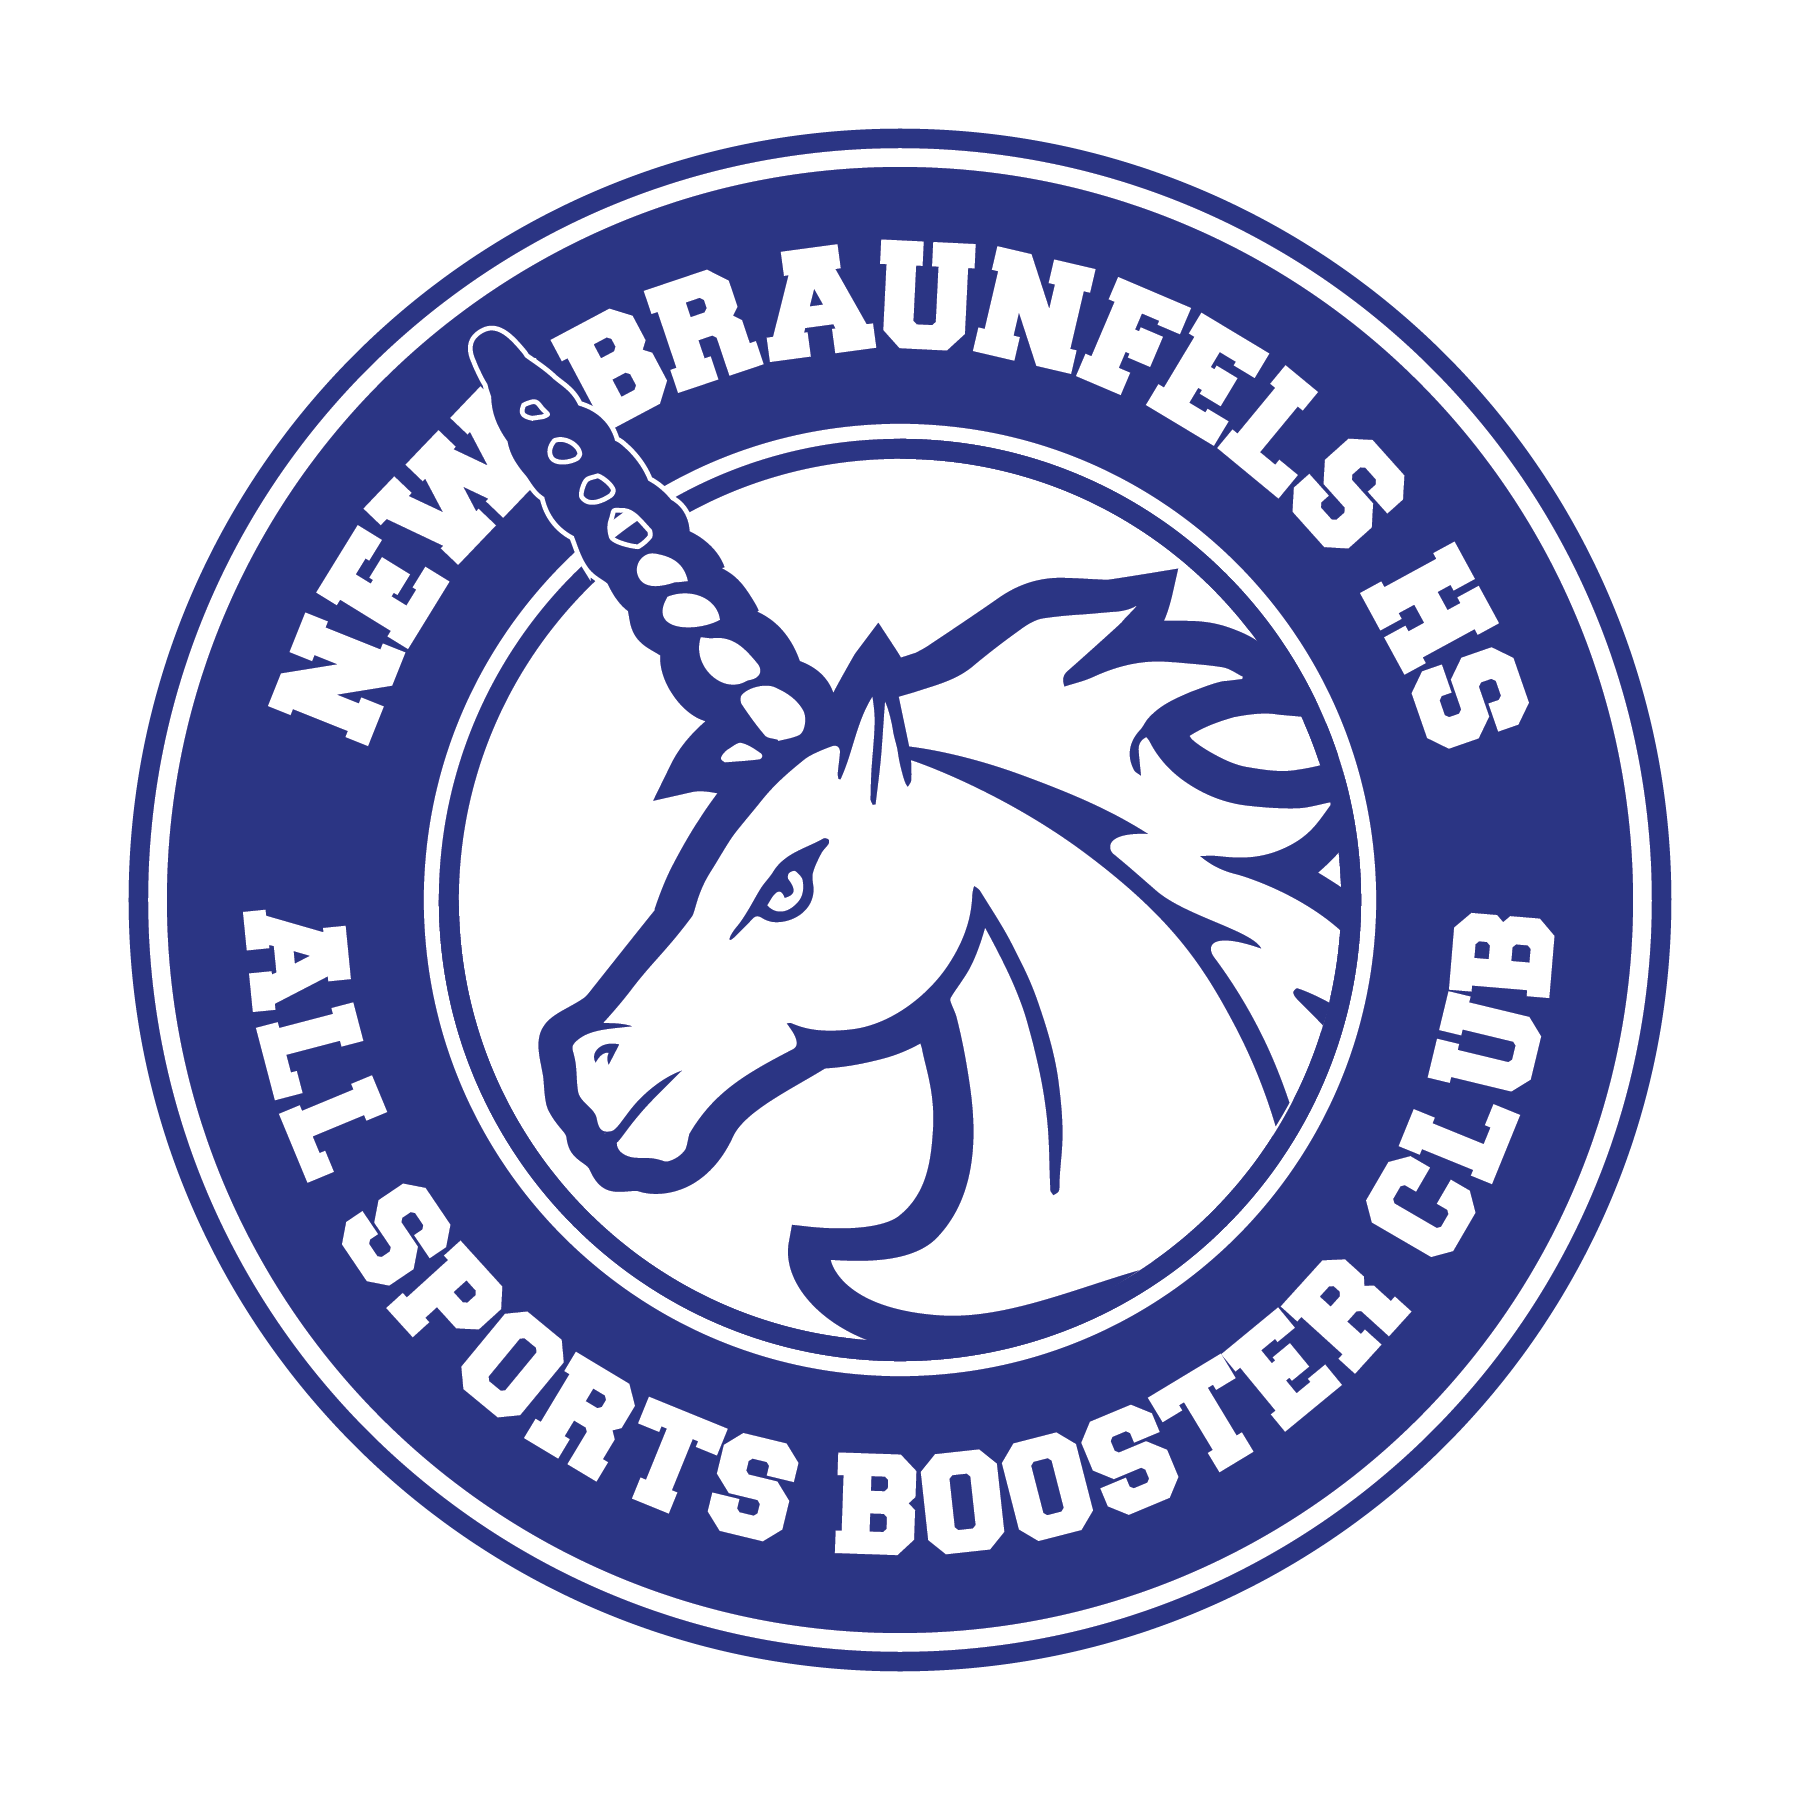 New Braunfels All Sports Booster Club logo